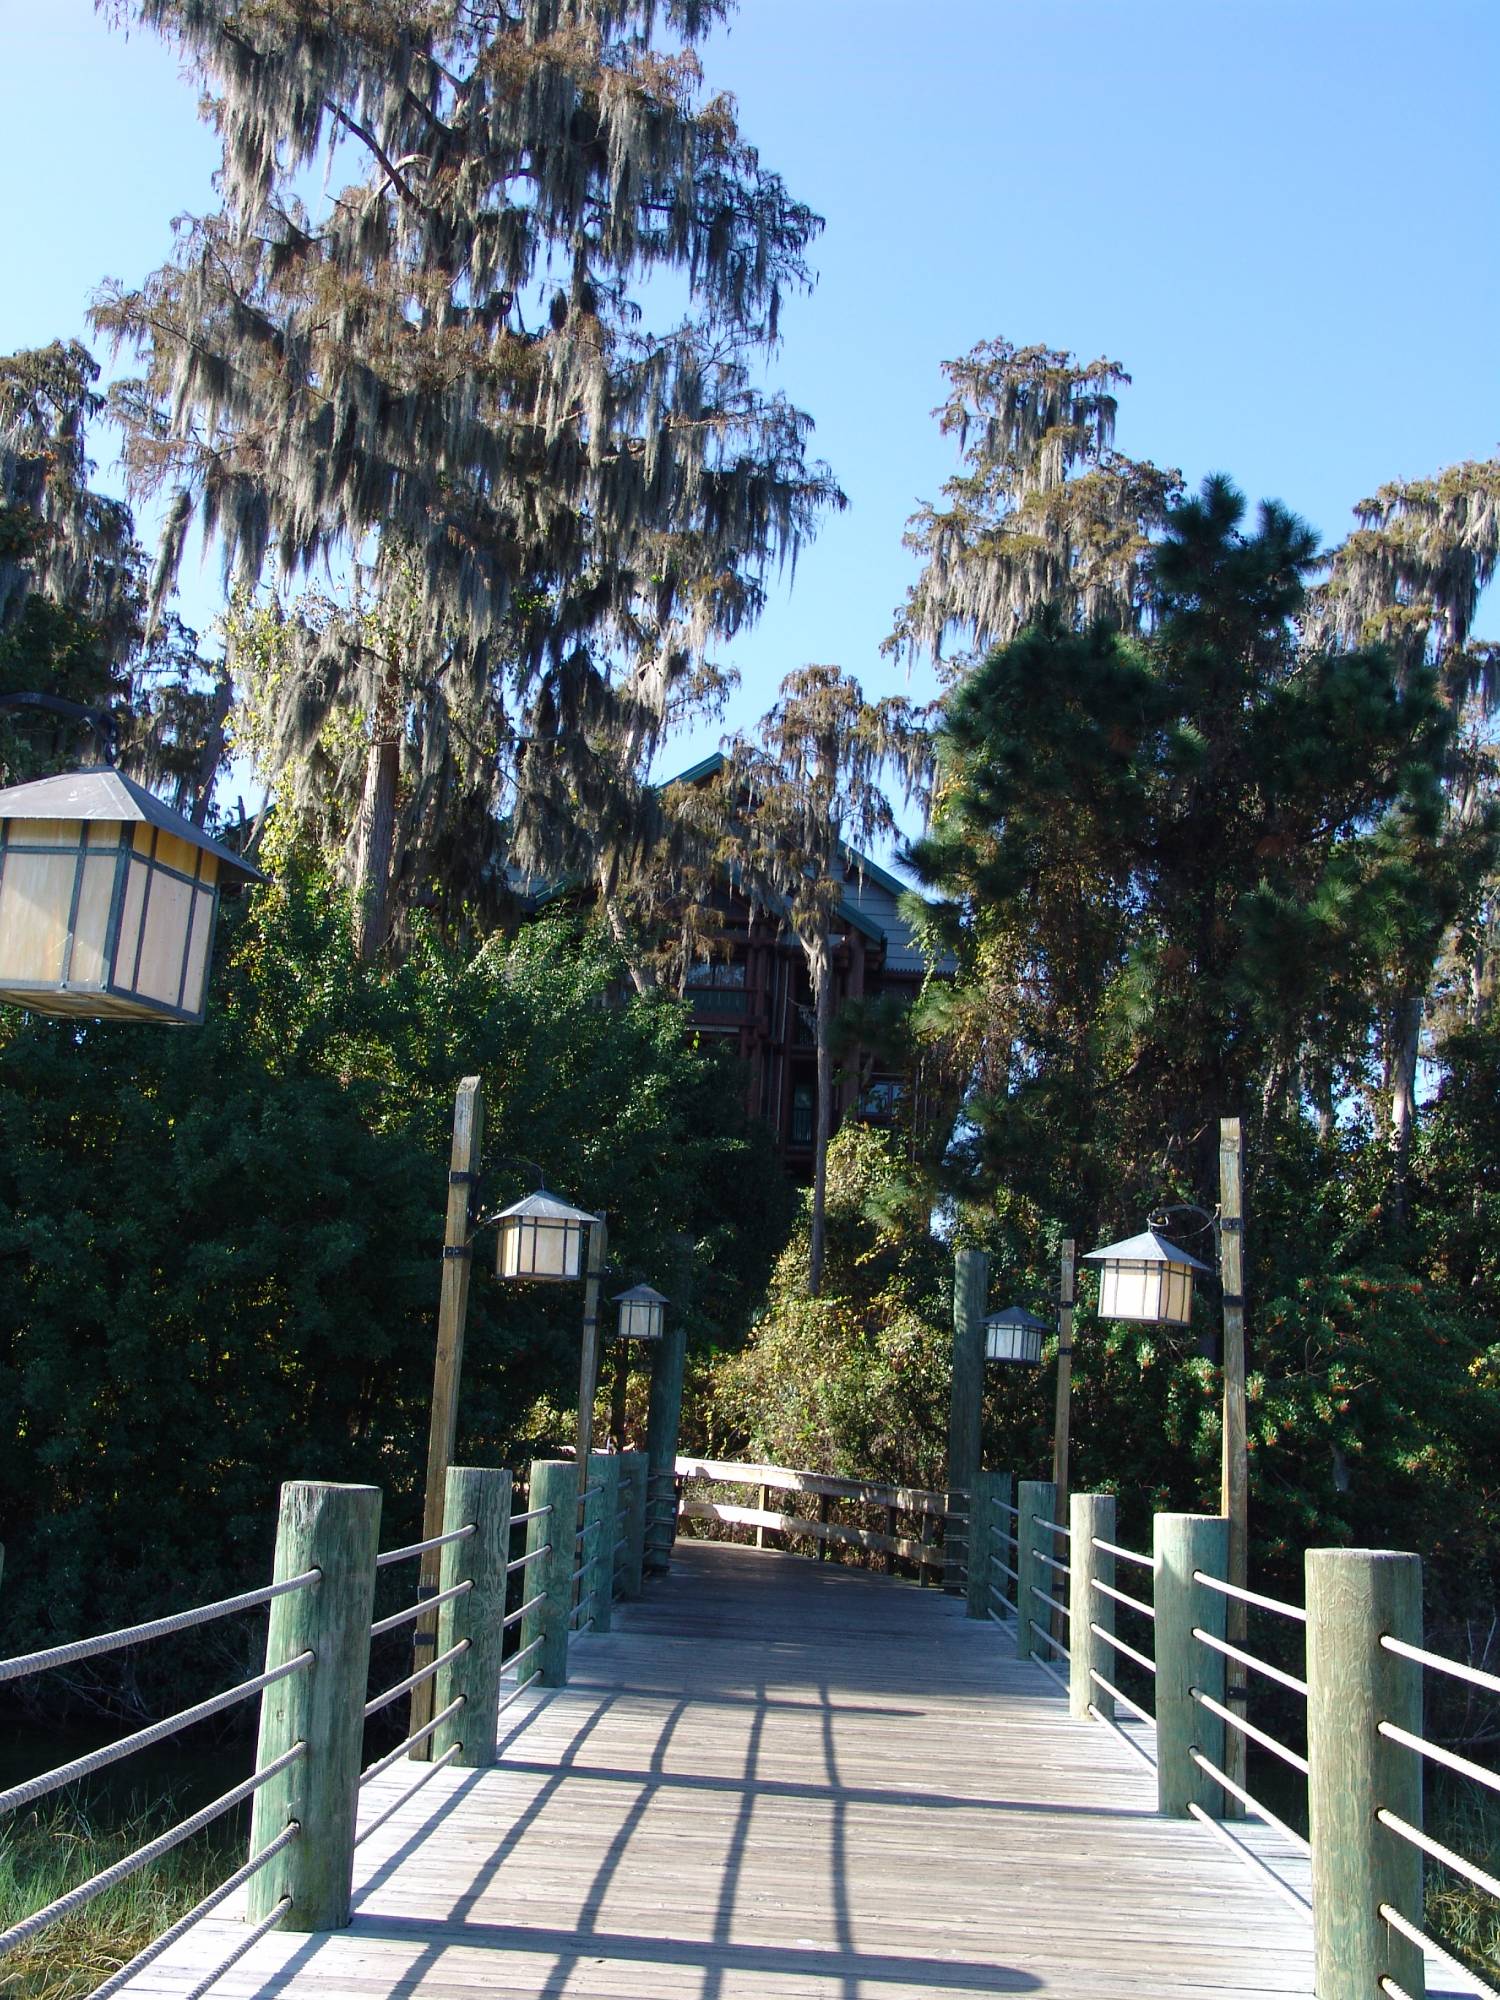 Wilderness Lodge - walkway to boat dock